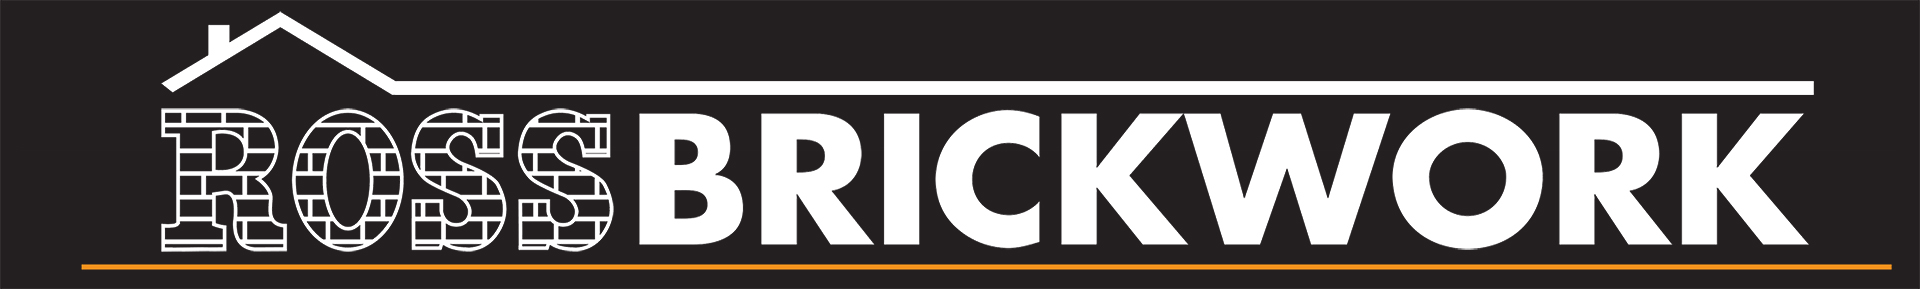 ROSS Brick Work Logo